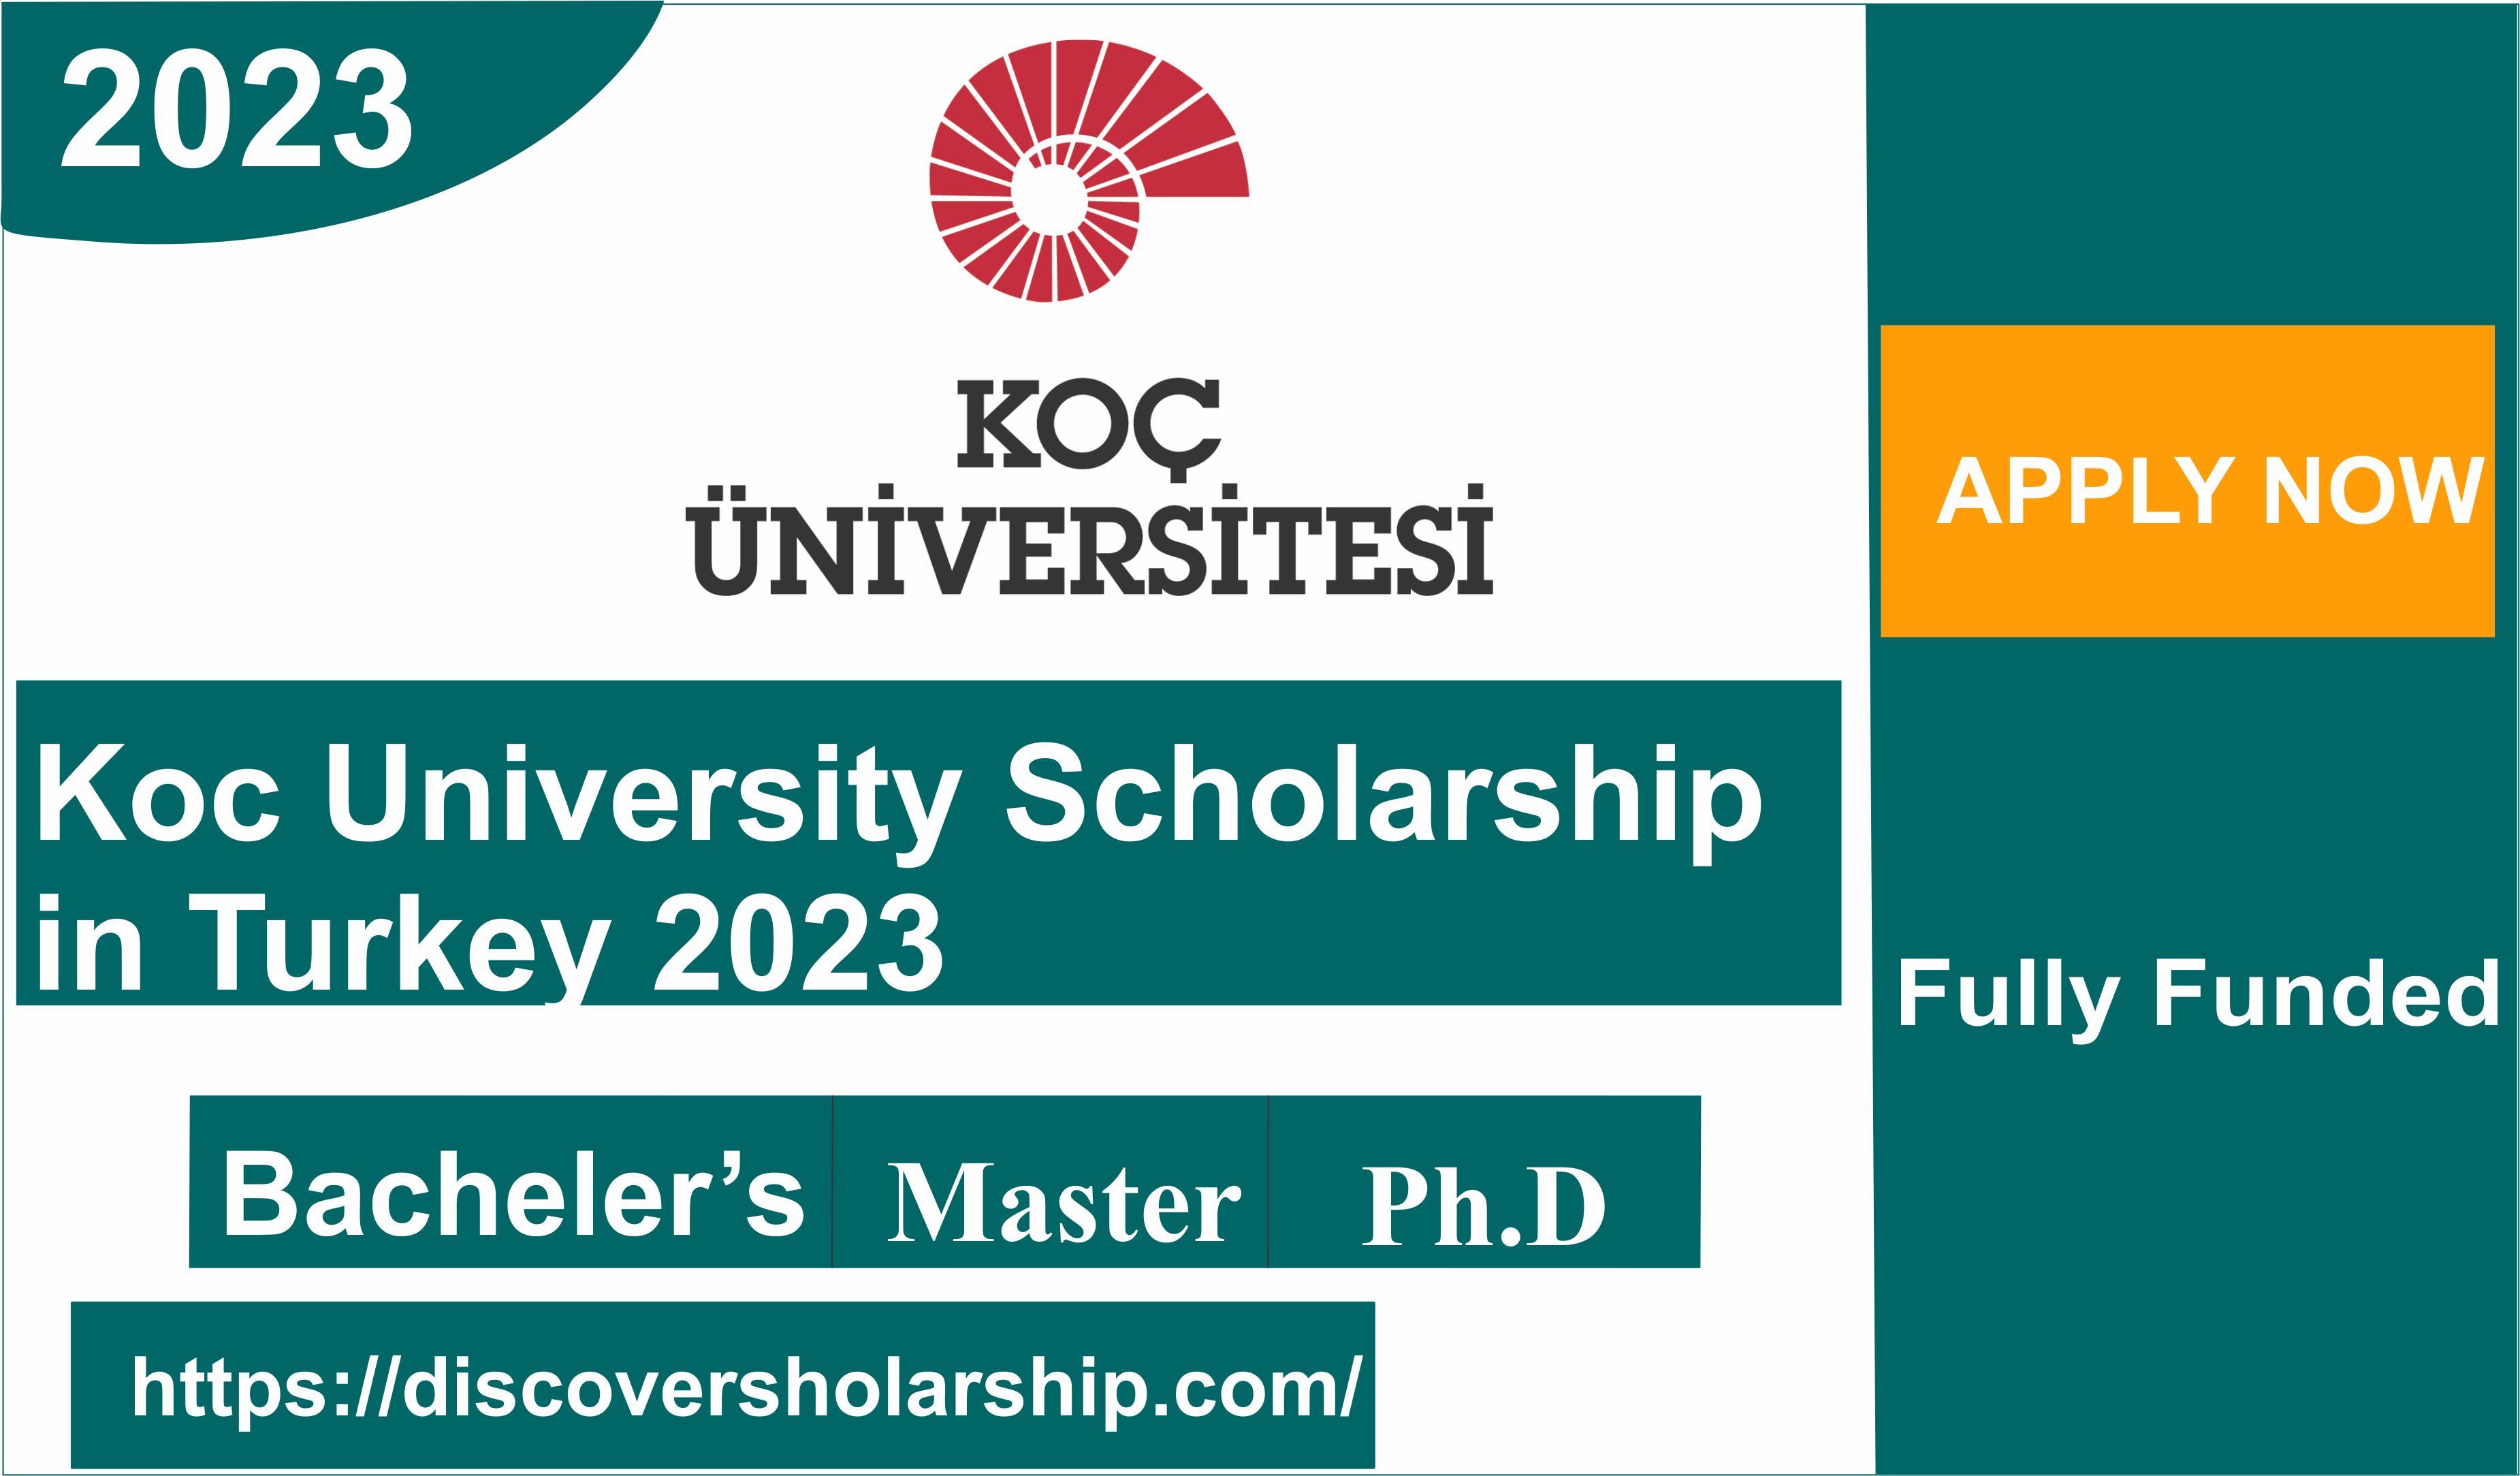 Koc University Scholarship in Turkey 2023